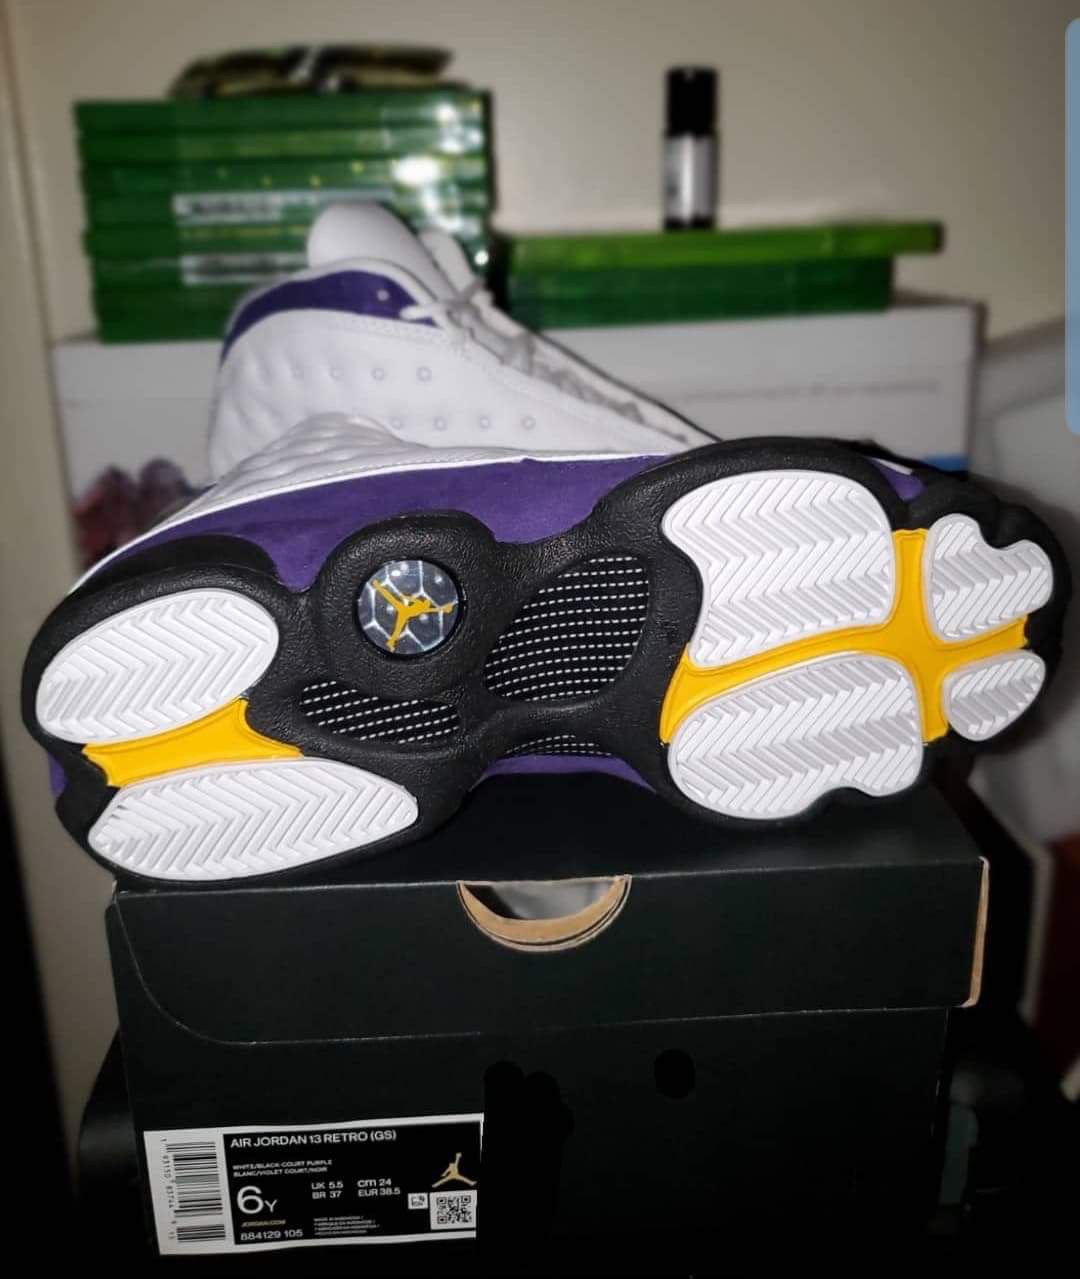 Air Jordan’s retro 13s Lakers size 6